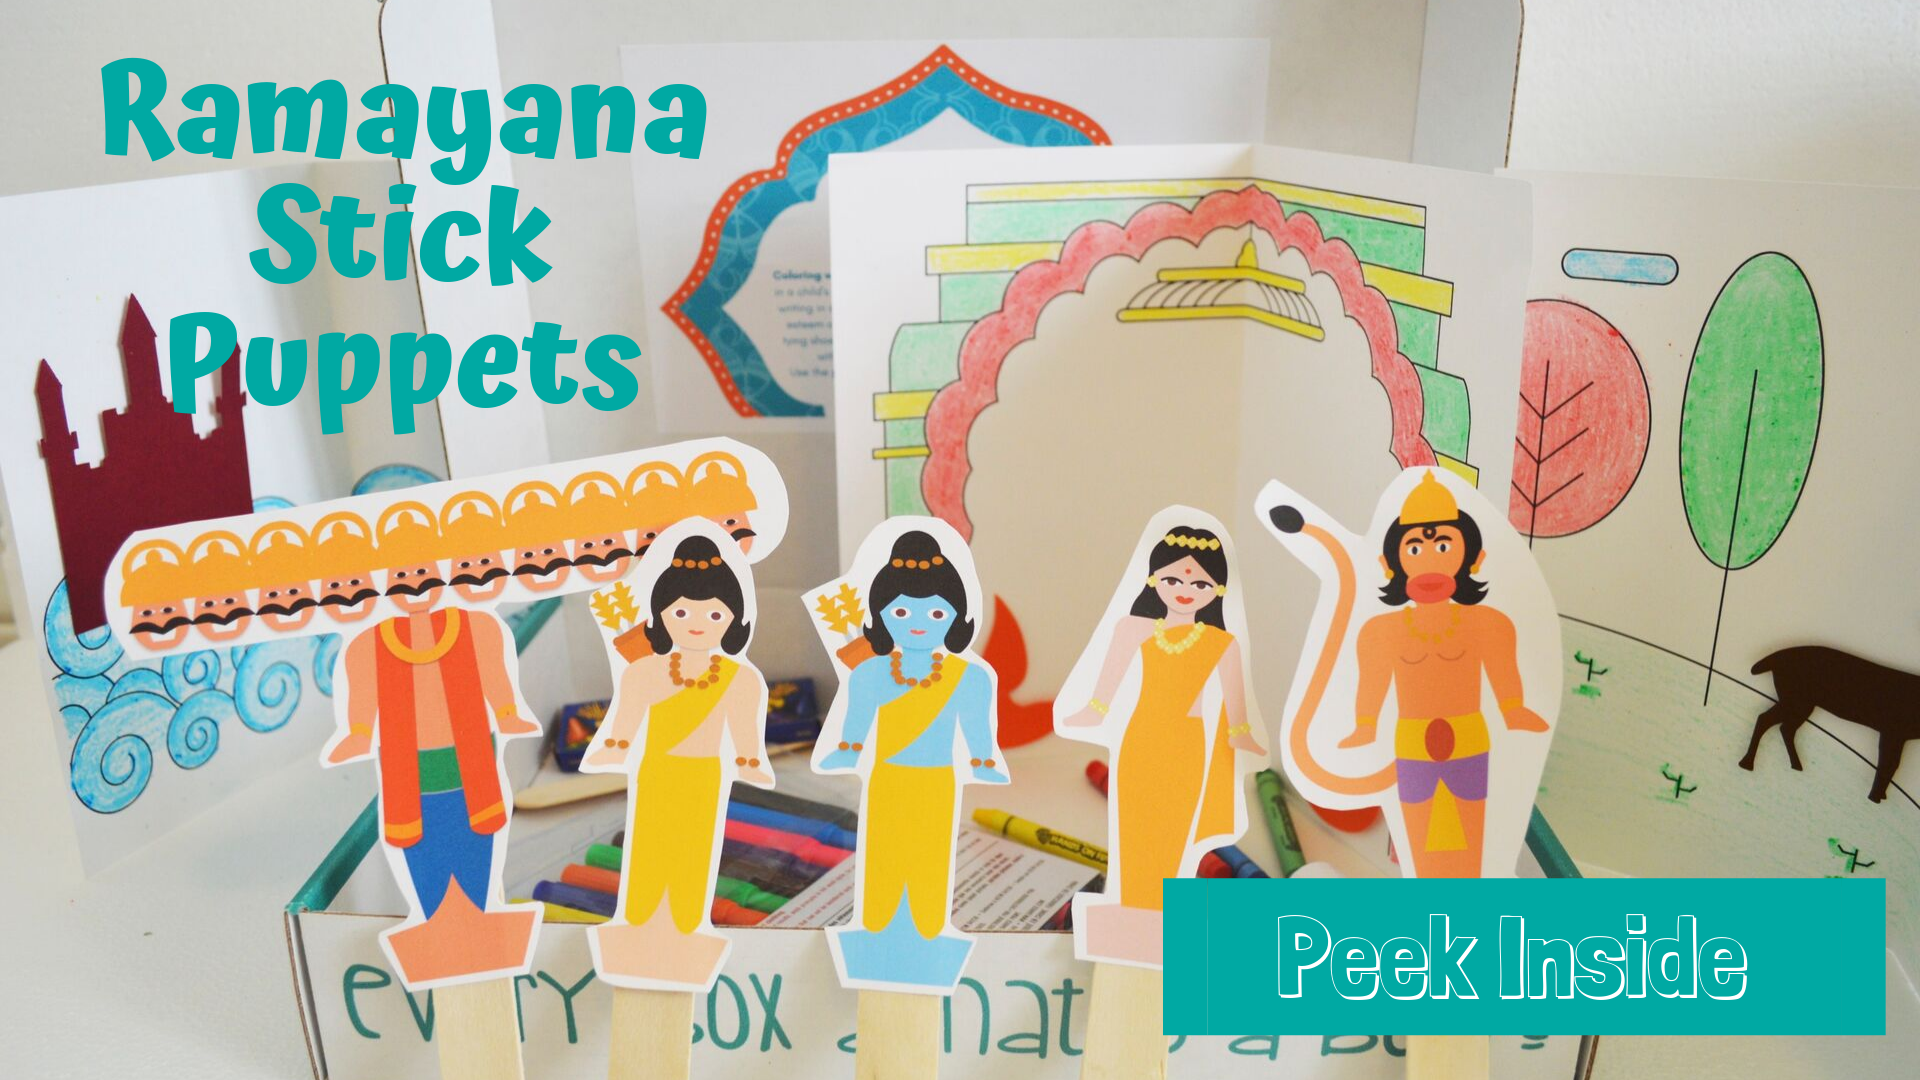 Ramayana Stick Puppets for preschoolers